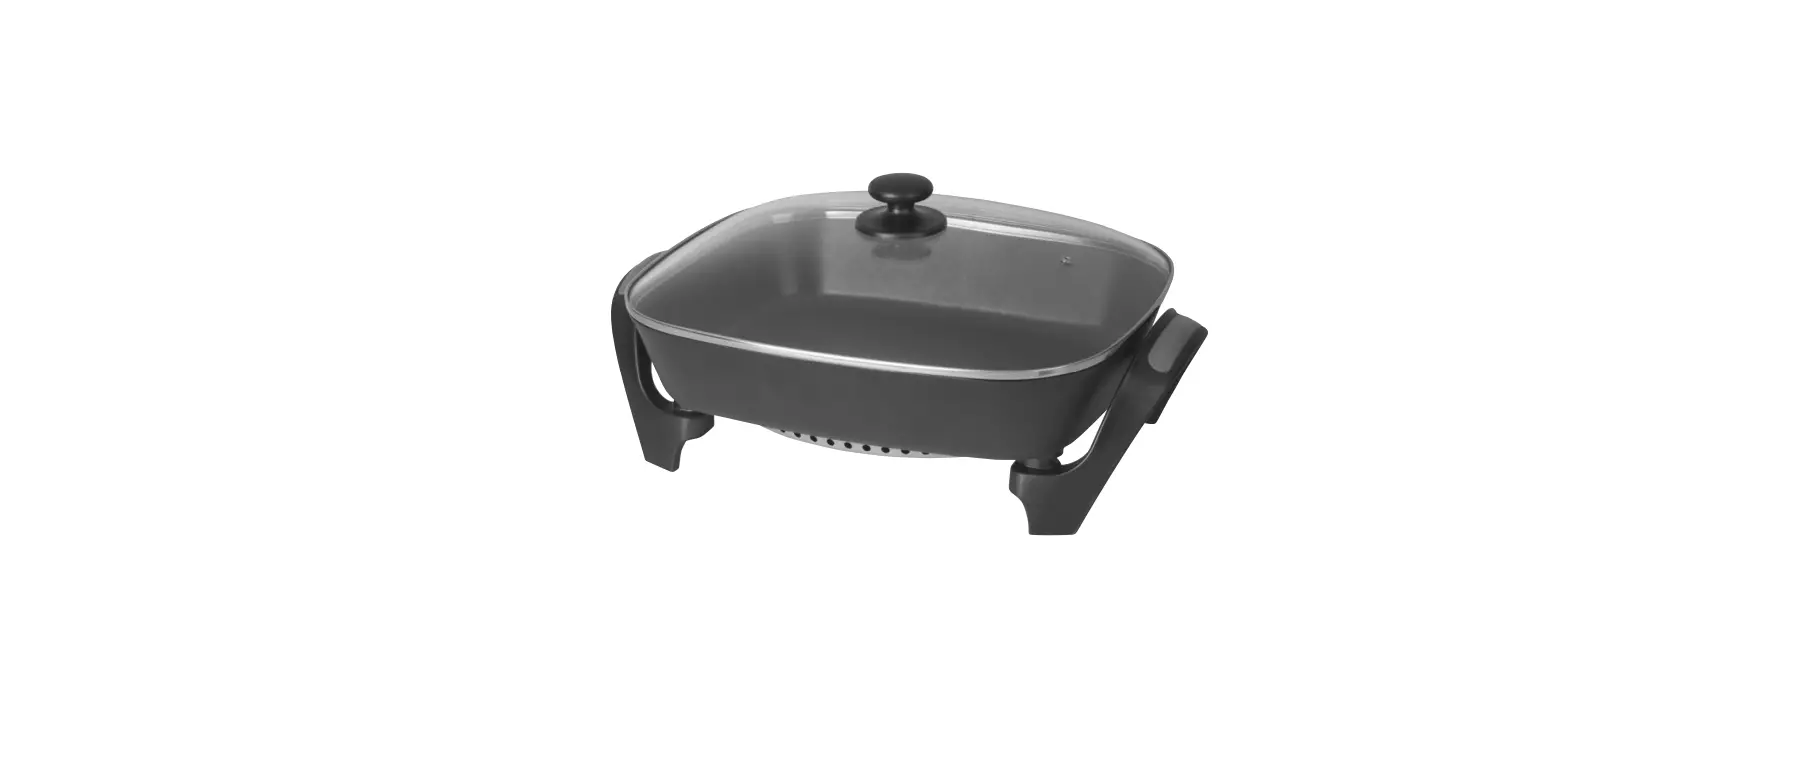 160 Electric multi-purpose pan